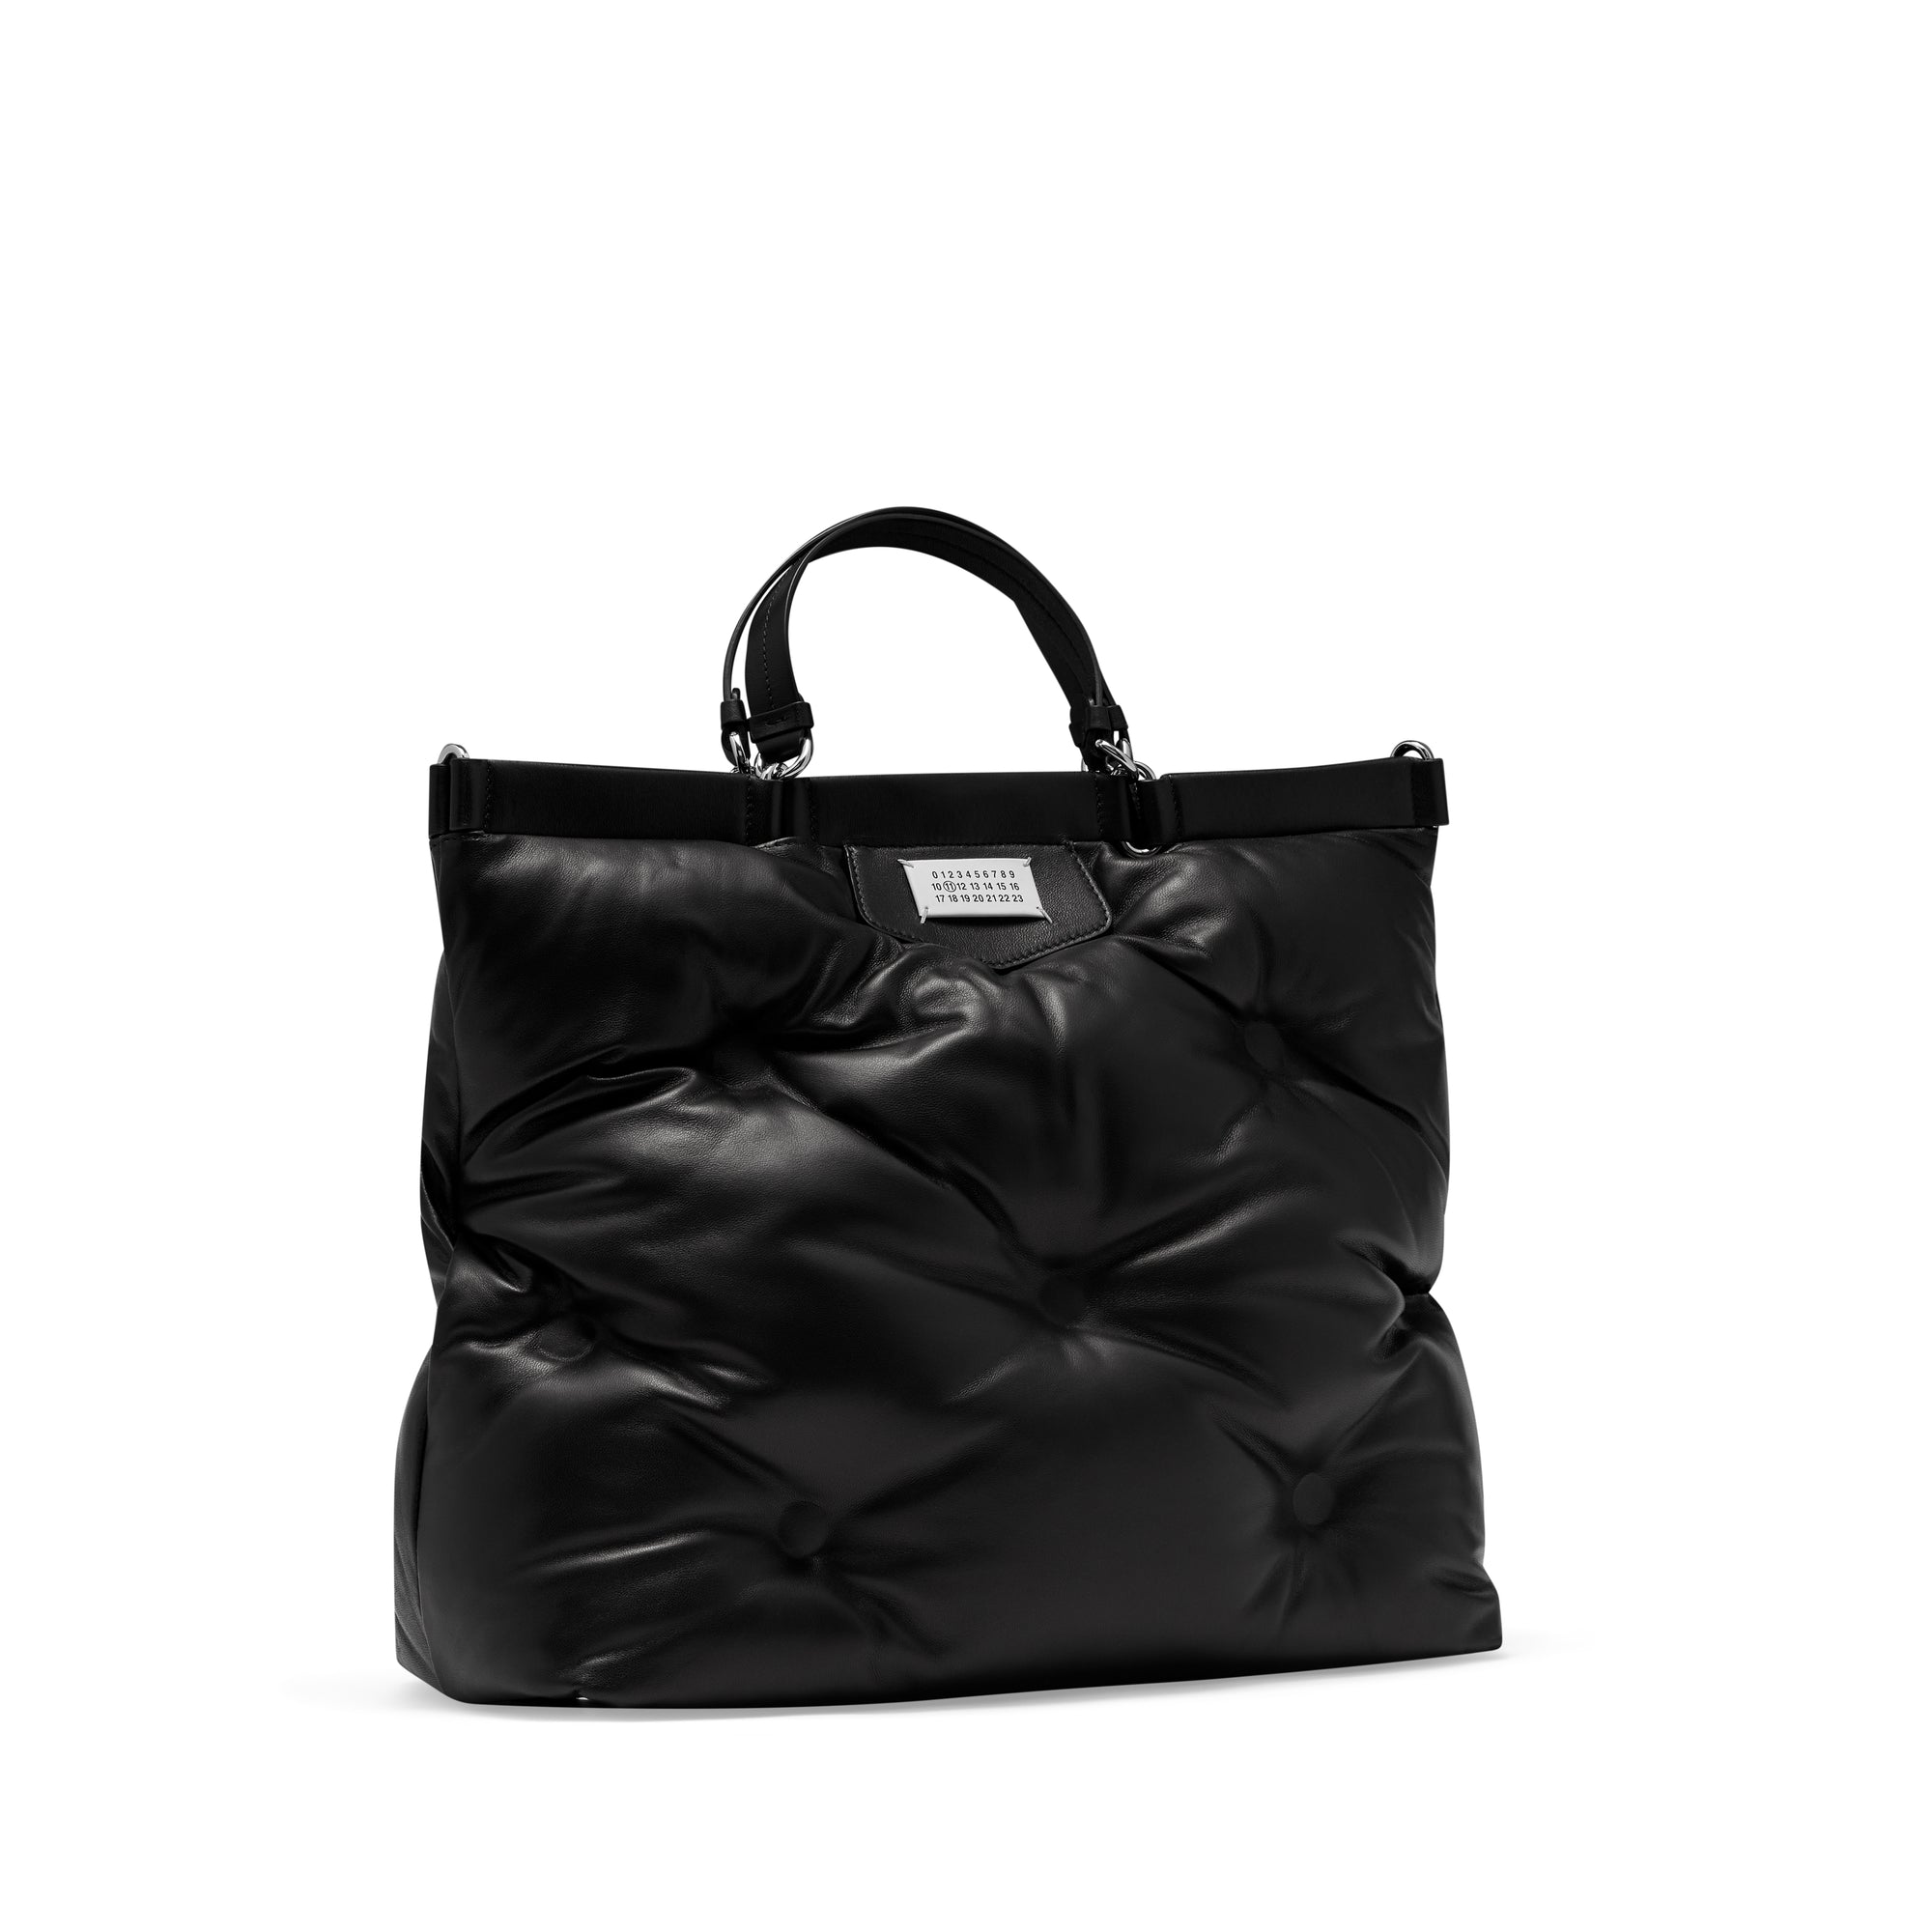 Maison Margiela - Women’s Glam Slam Shopping Large Bag - (Black) view 2